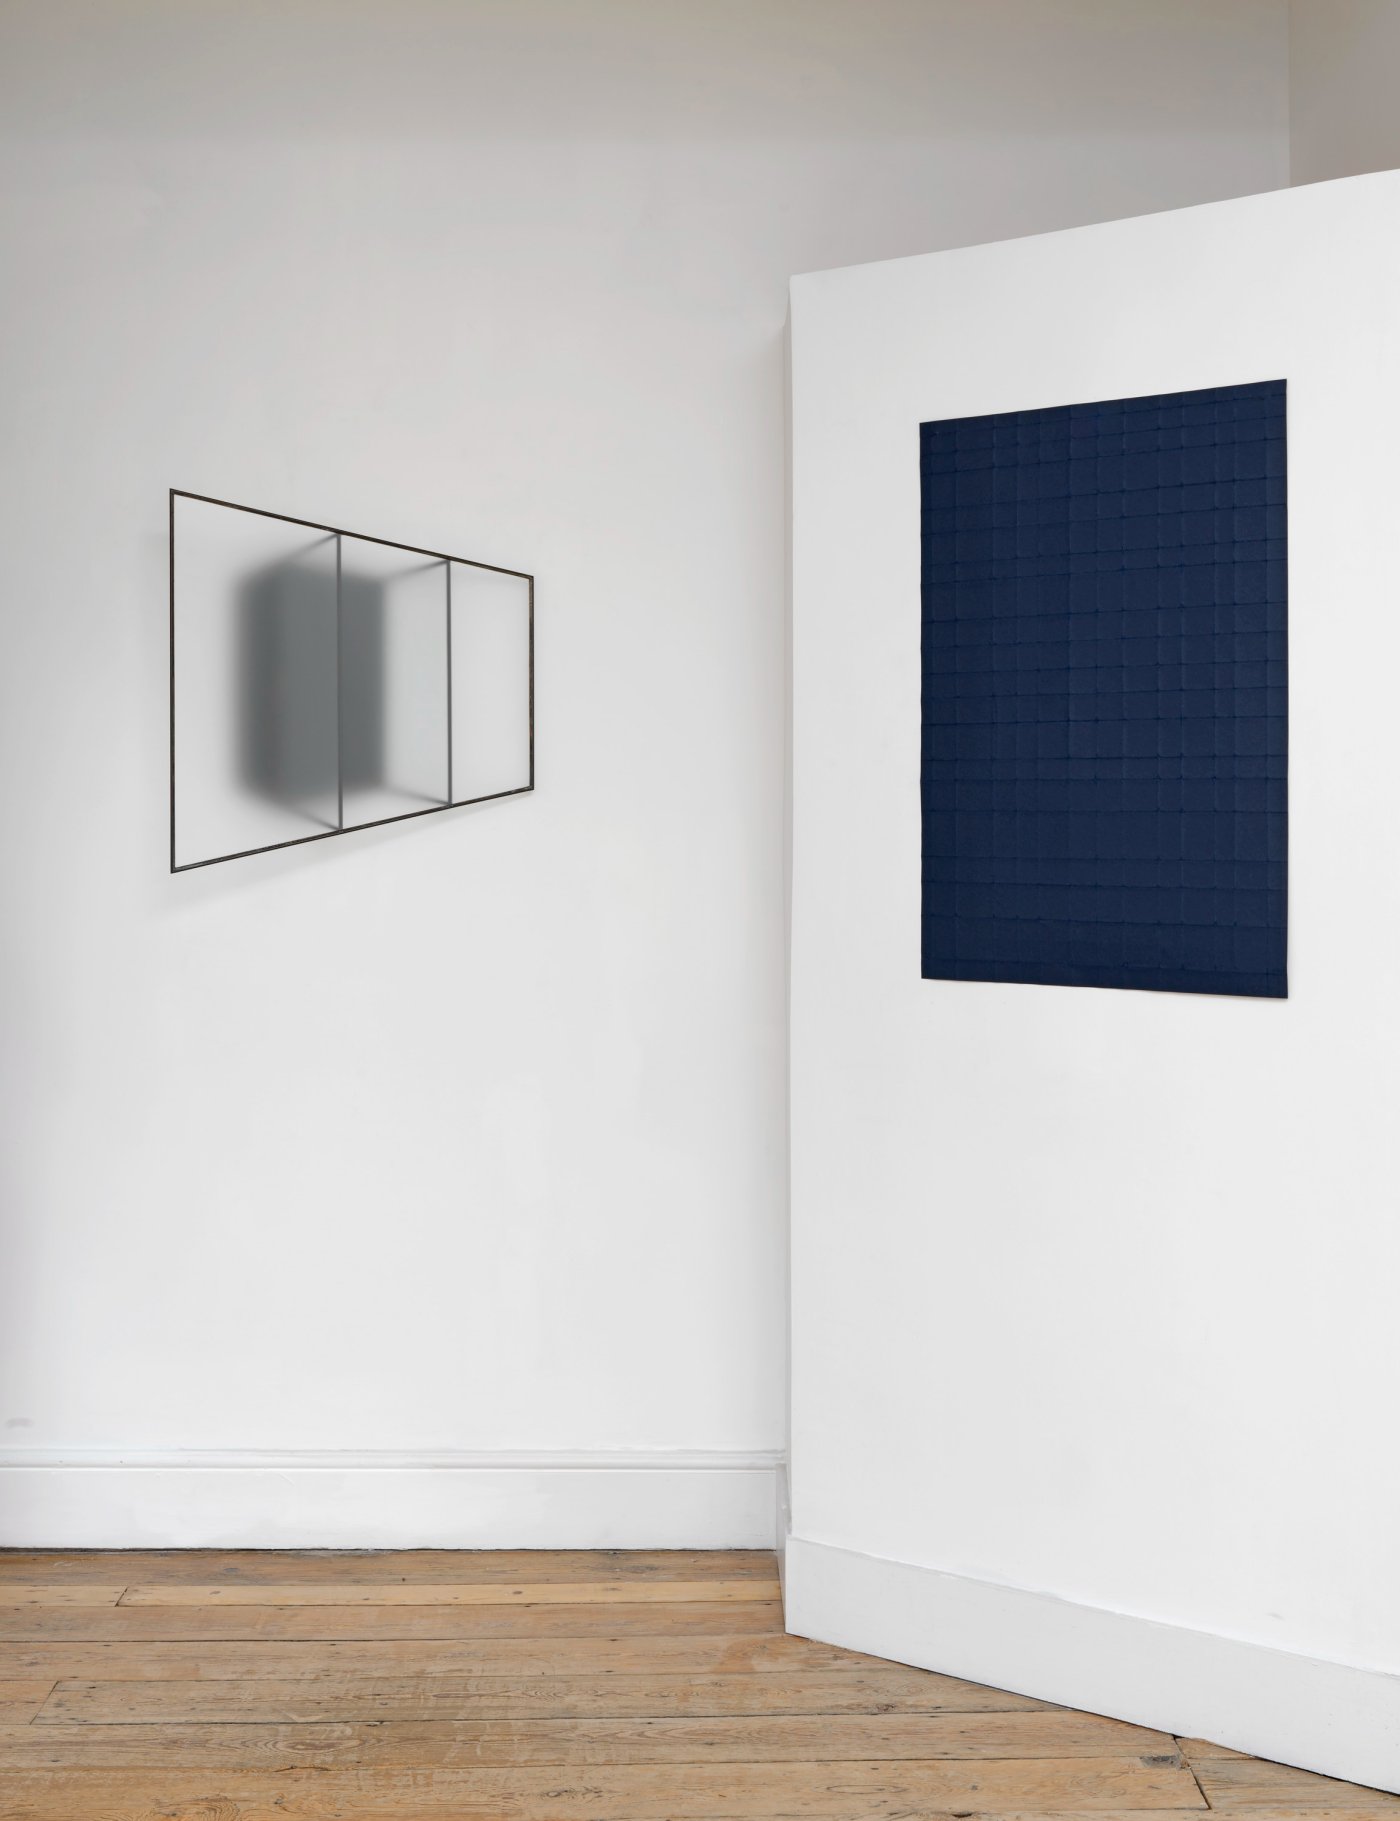 Installation image for Zim-Zum: The Folding World, at Patrick Heide Contemporary Art